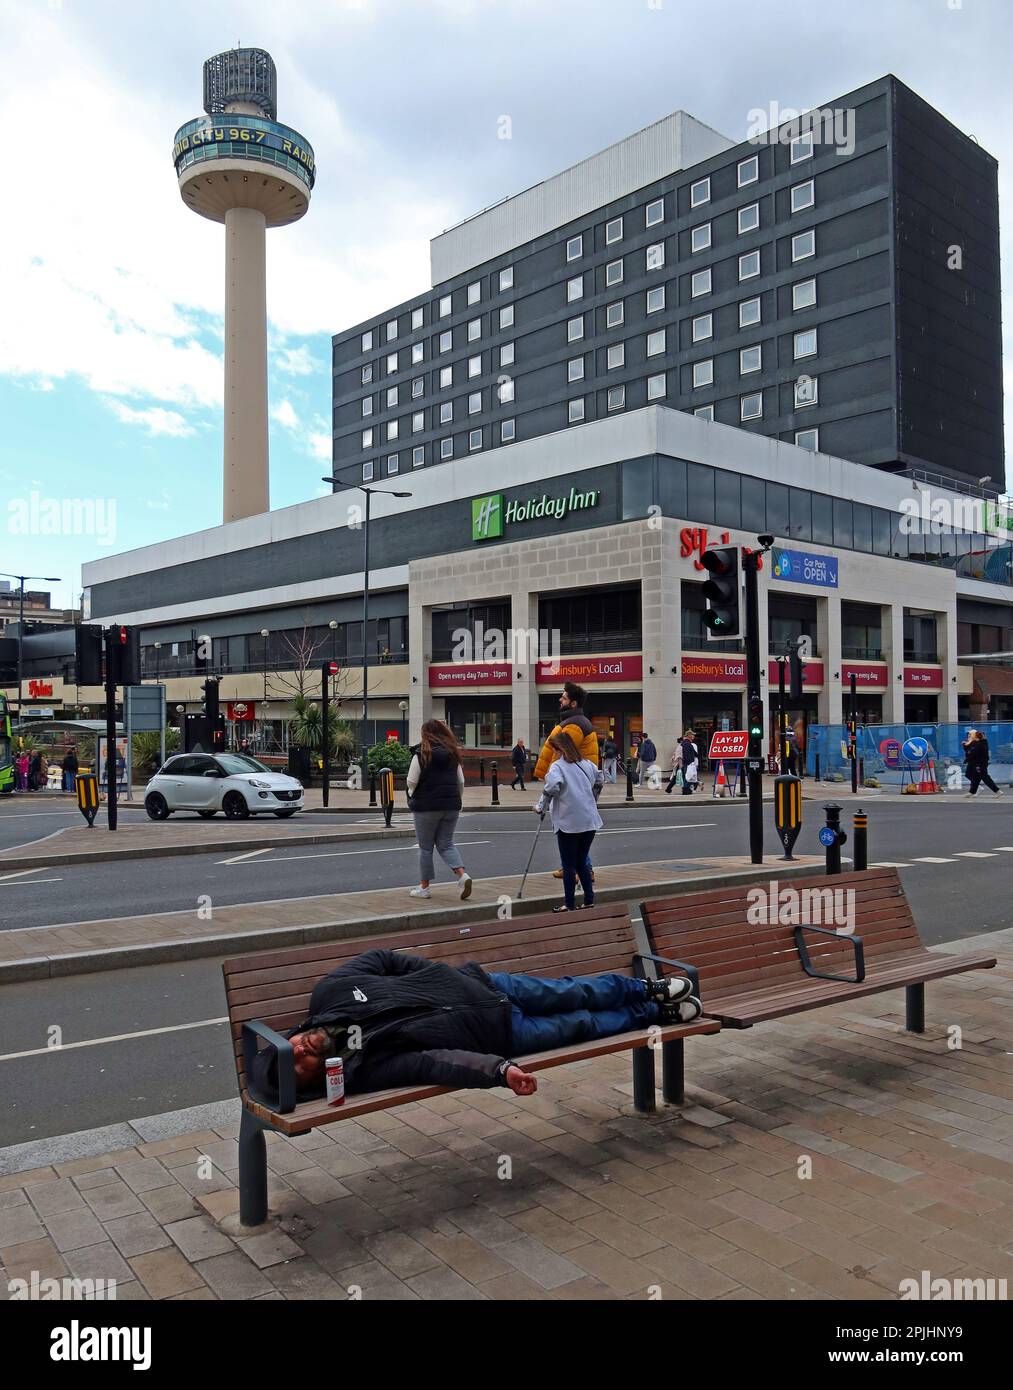 Liverpool - le centre St Johns, Holiday Inn, radio City Tower et un homme endormi sur un banc, Lime Street, Liverpool, Merseyside, Angleterre Banque D'Images